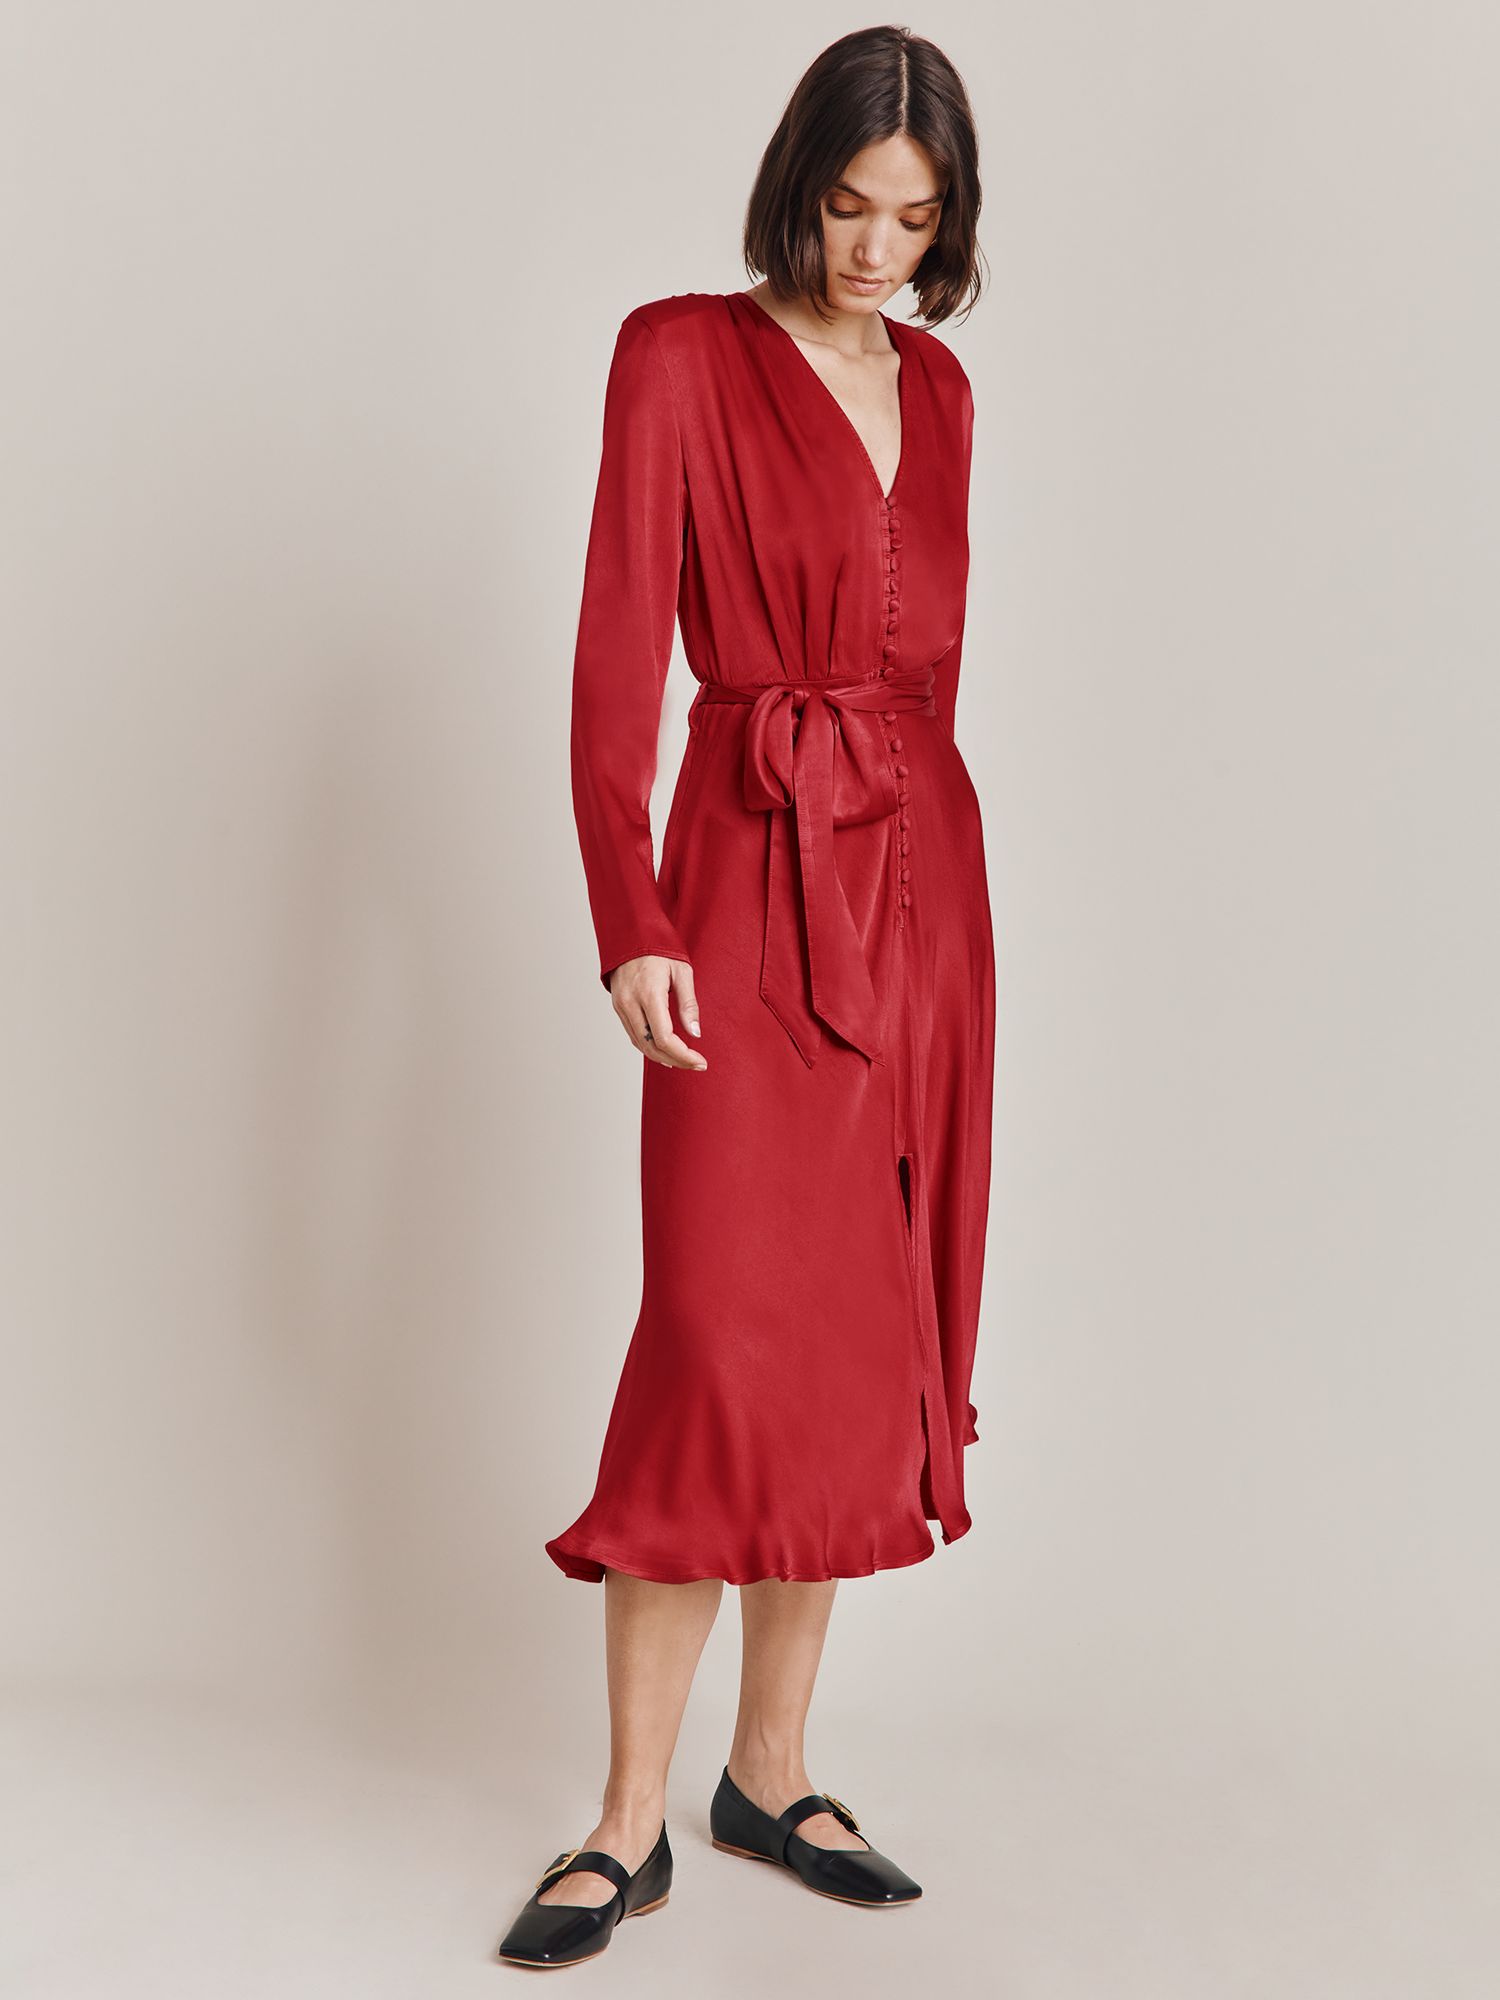 Ghost Meryl Satin Midi Dress, Rosey Red at John Lewis & Partners